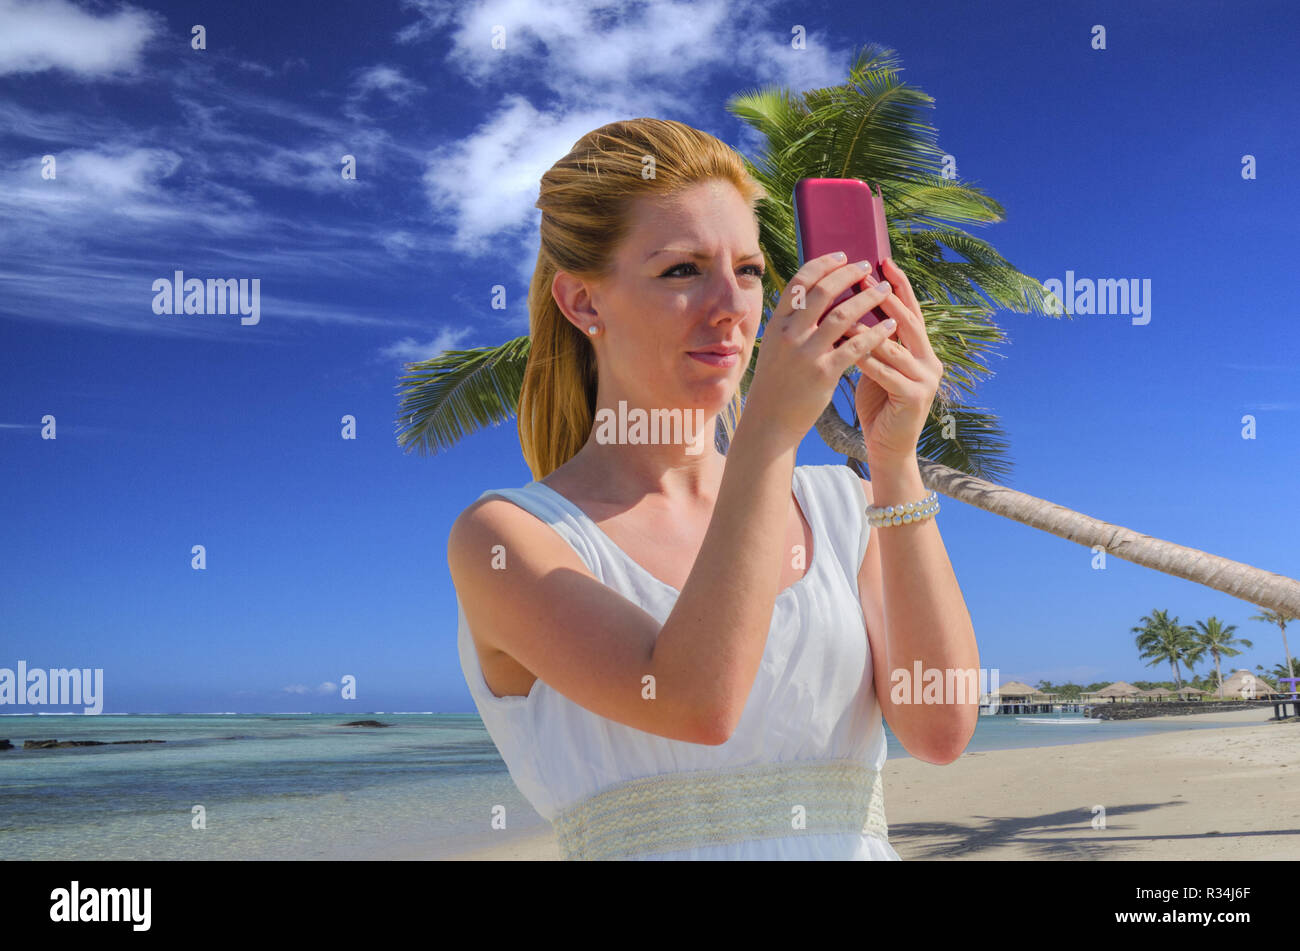 selfie on the beach Stock Photo